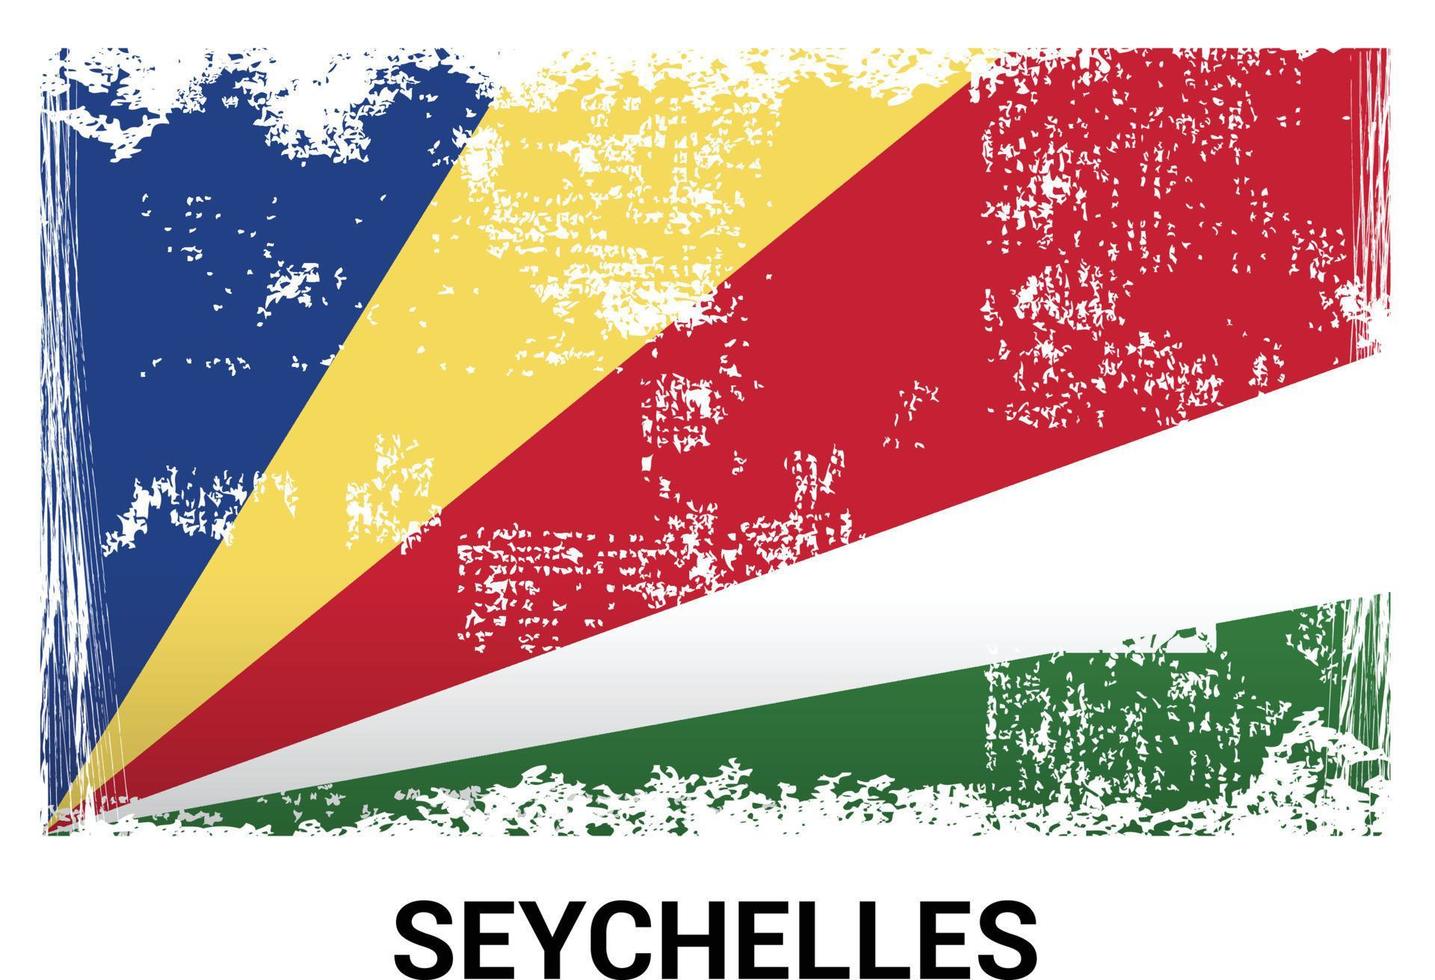 Seychelles flags design vector